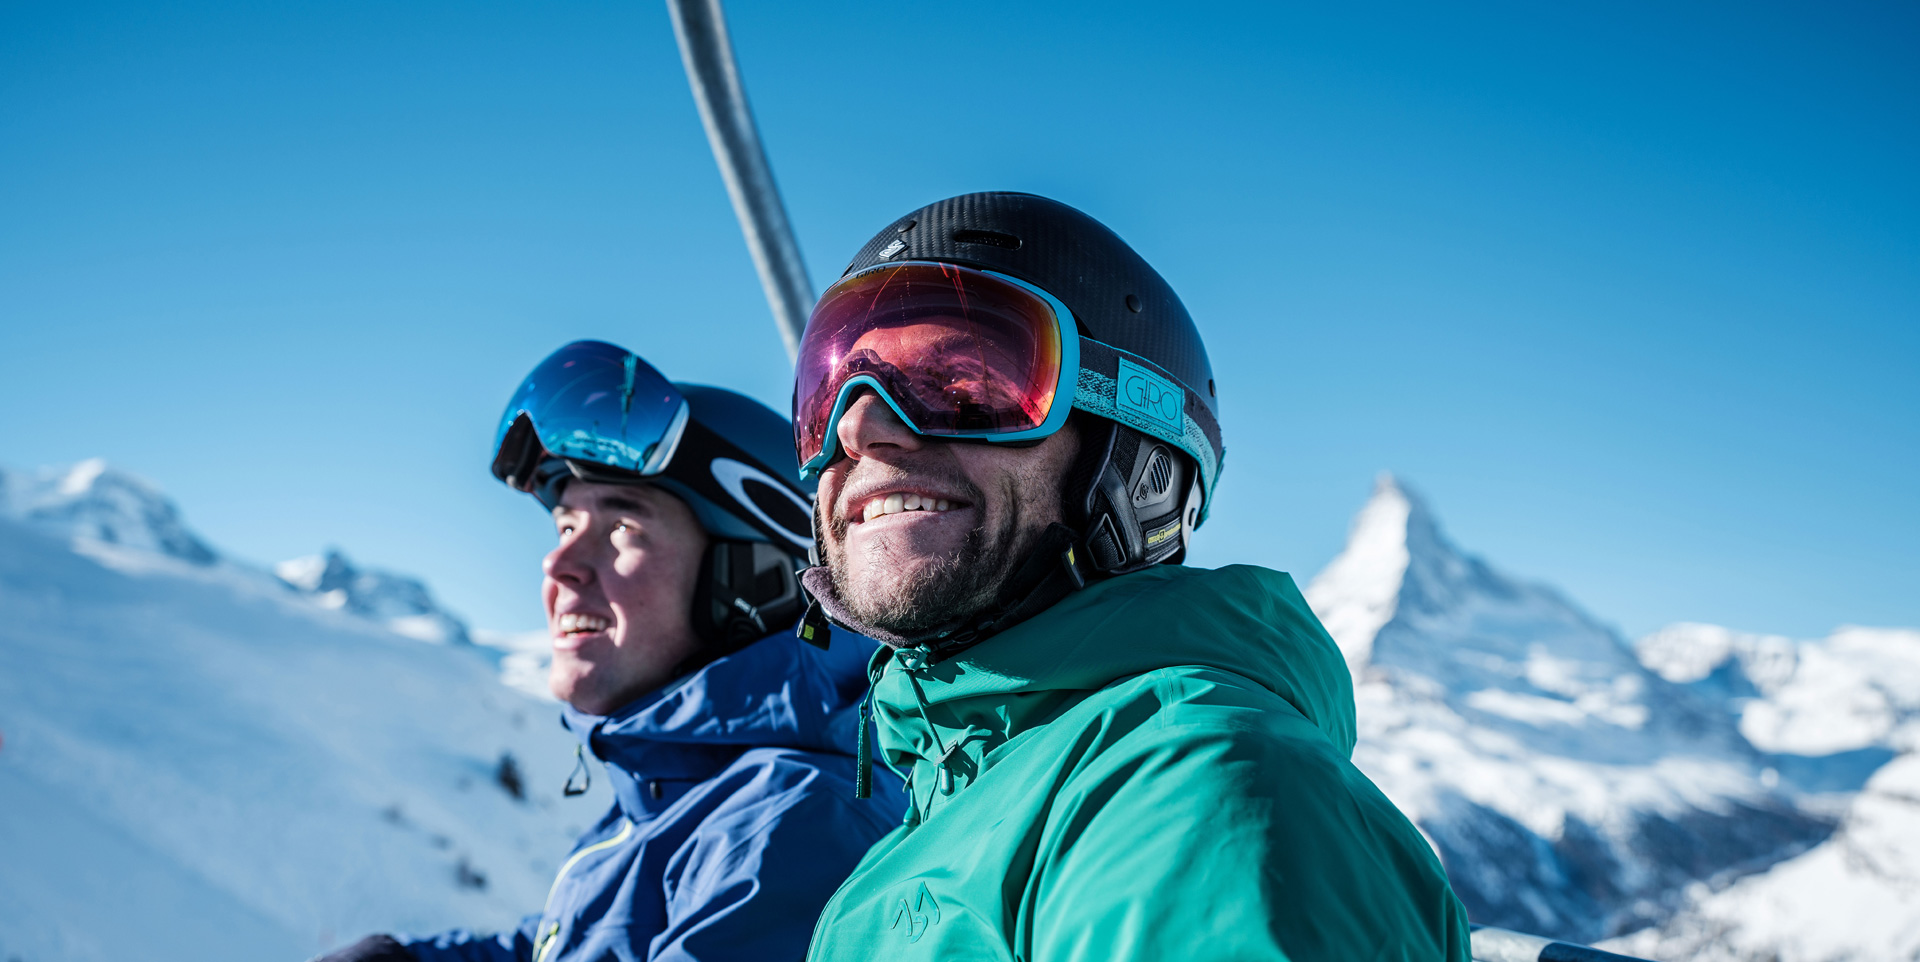 3_Skifahrer-auf-Sessellift-cr—Pascal-Gertschen-2018_Forside_Slide